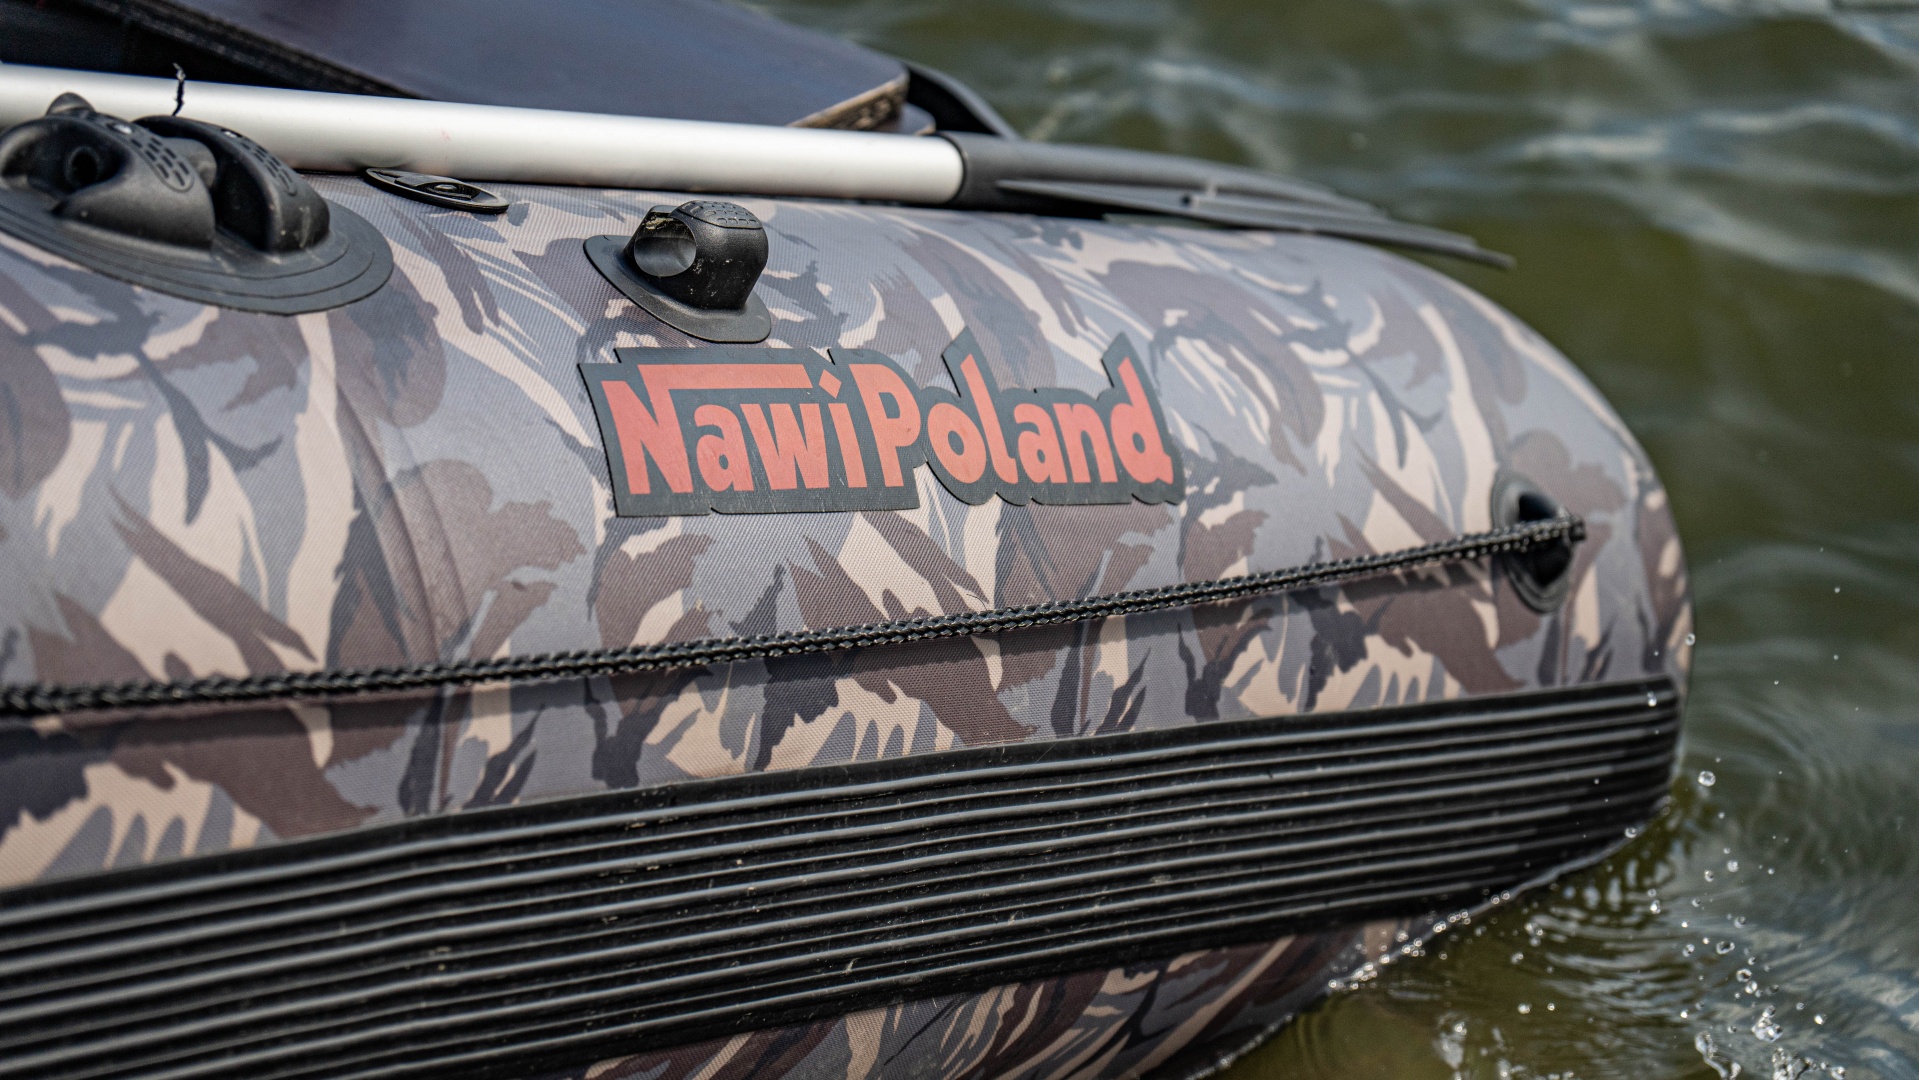 NawiPoland CAT 400 Inflatable Boat - Catamaran